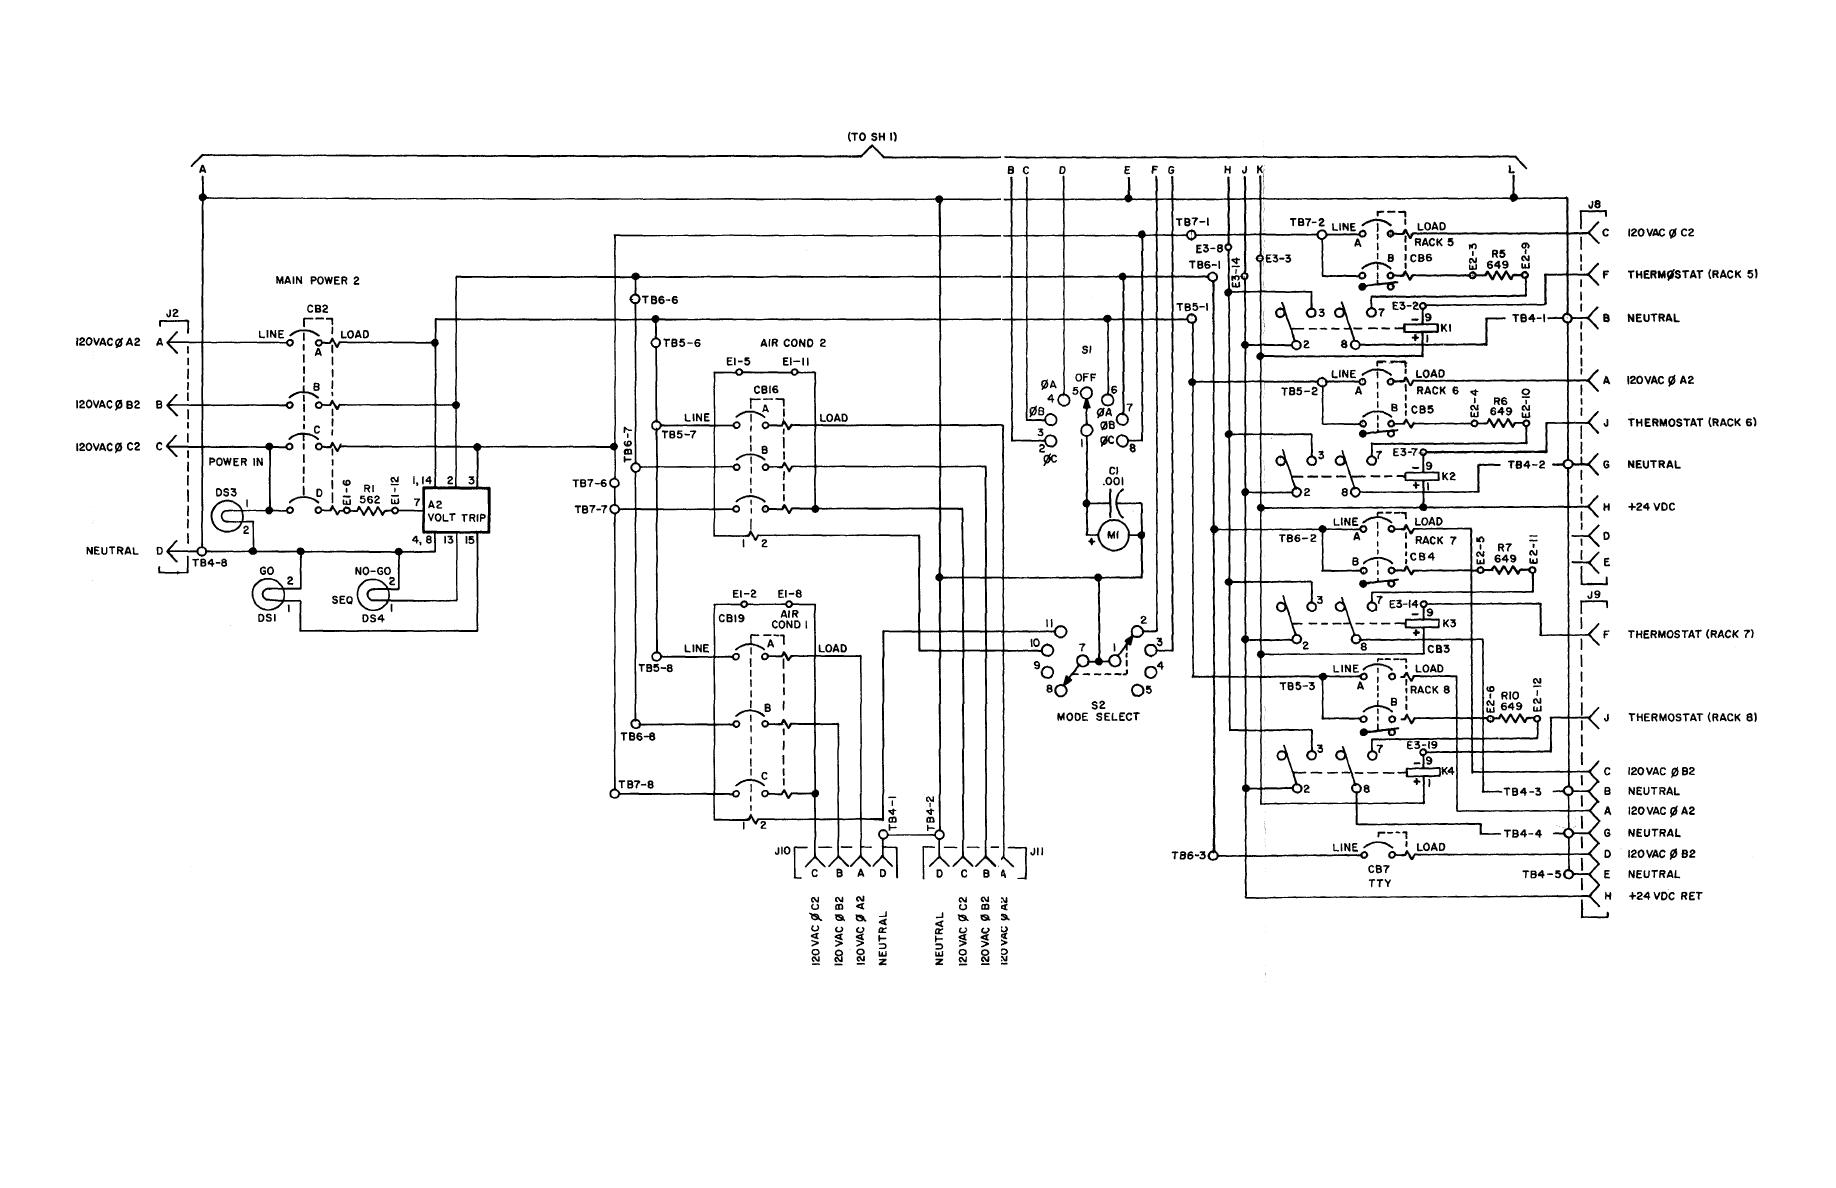 Power Distribution Panel Schematic Wiring Diagram Sheet